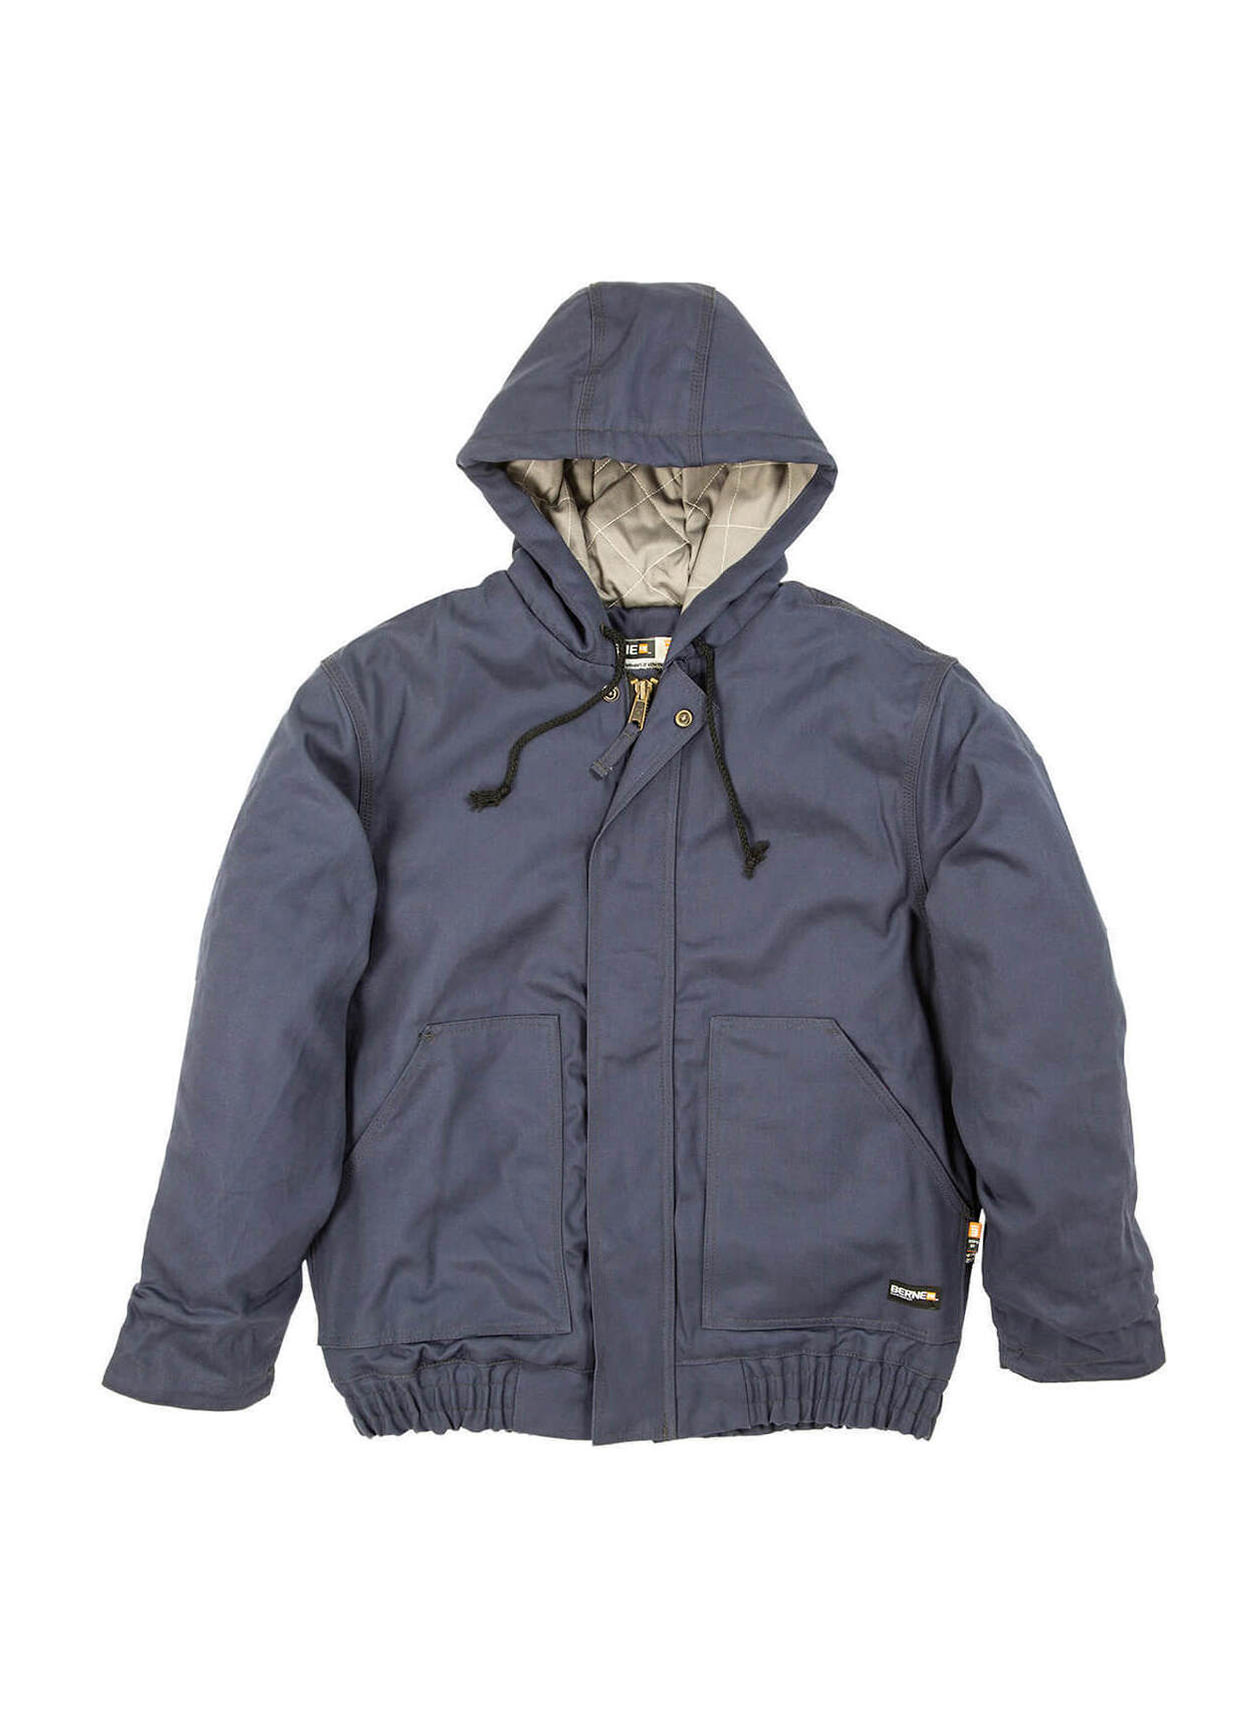 Berne Men's Navy Flame-Resistant Hooded Jacket